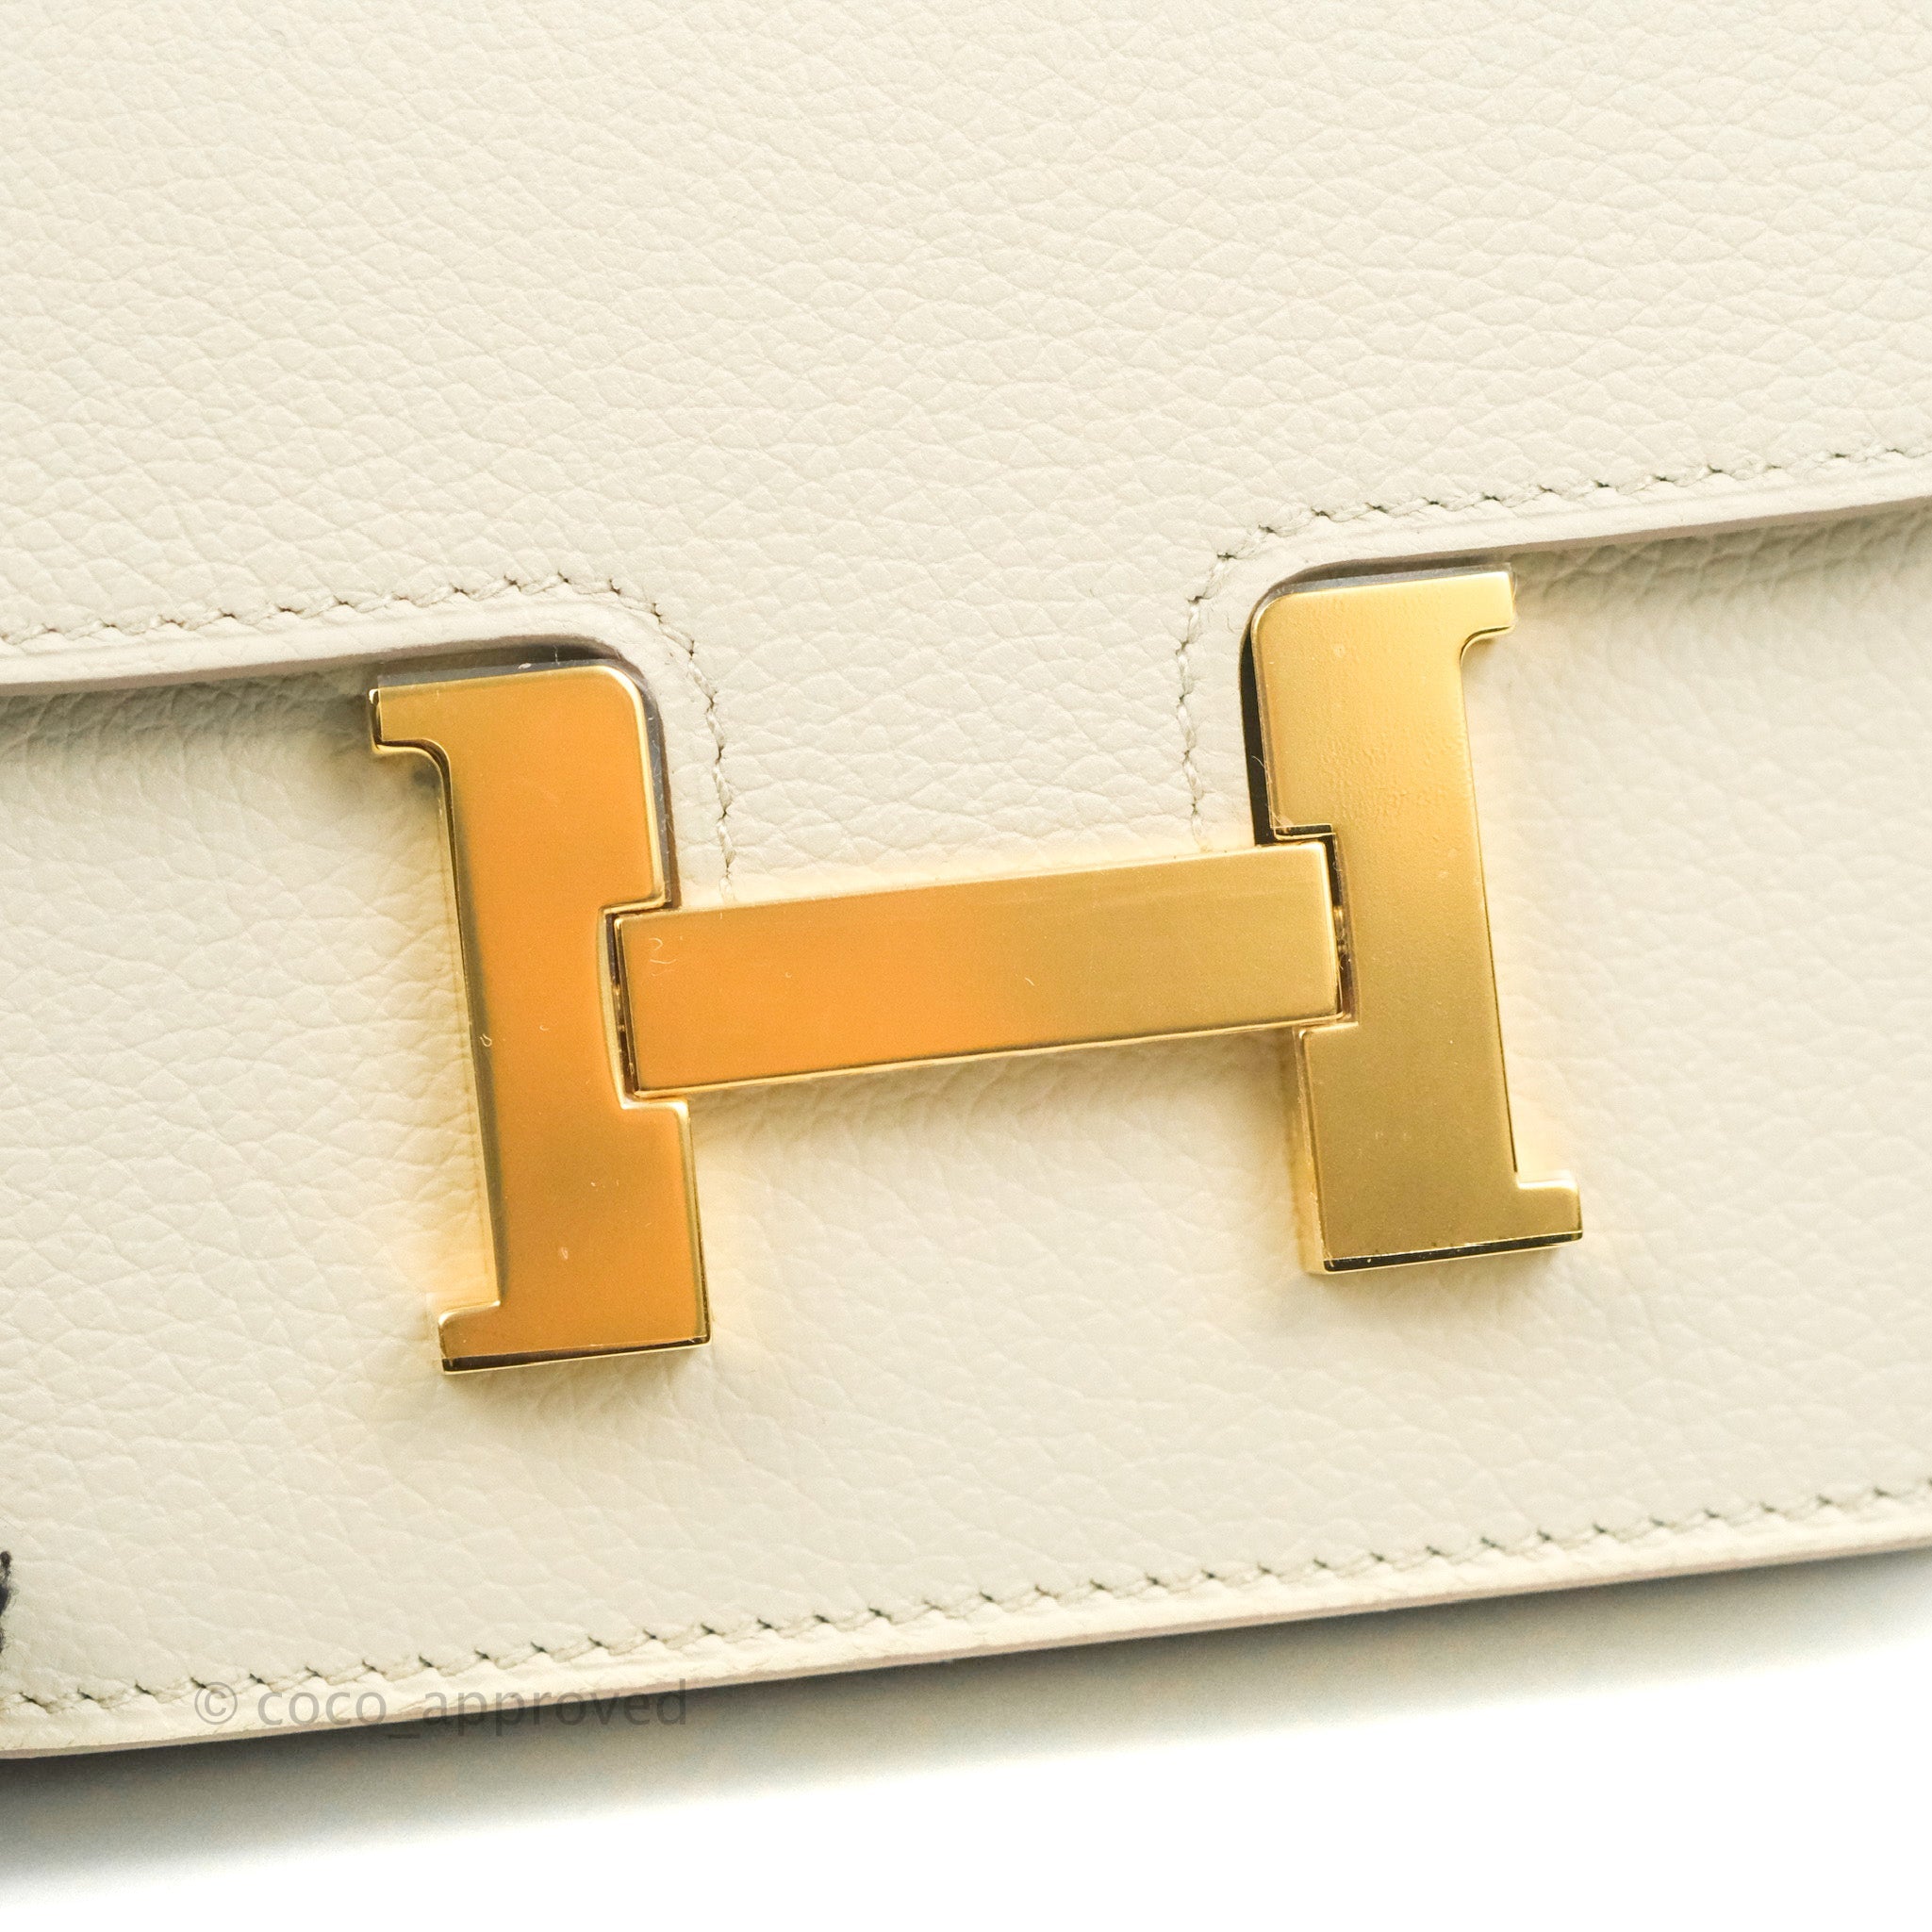 Hermes Constance Slim Wallet Beton Evercolor Gold Hardware – Madison Avenue  Couture